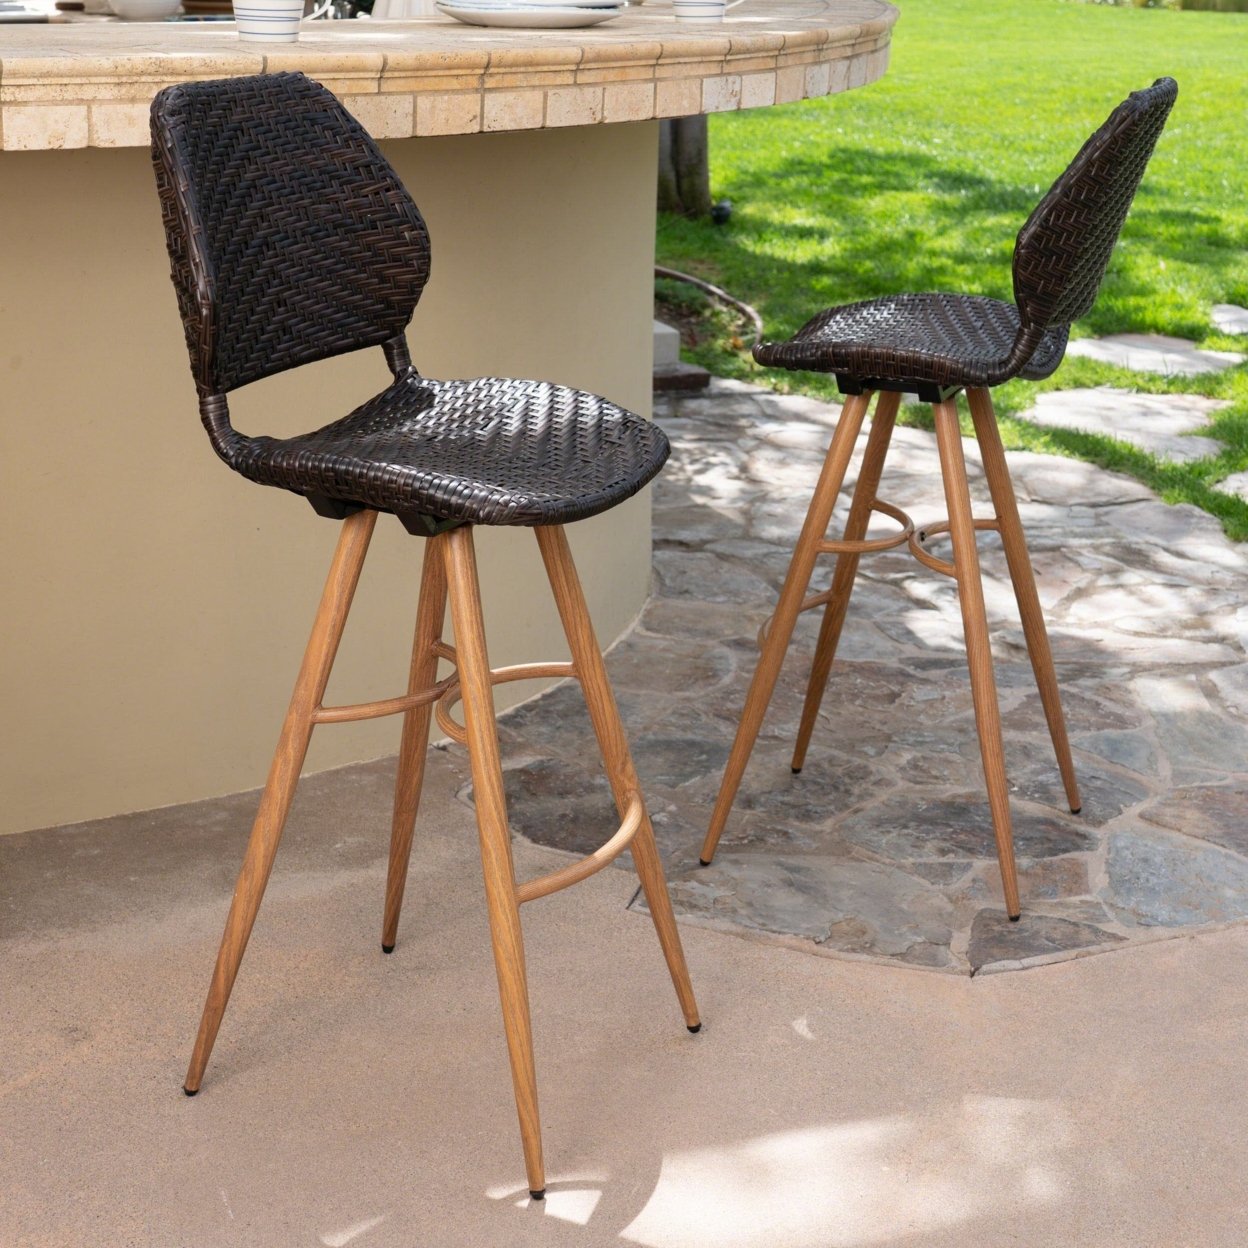 Amaya Outdoor Multi-brown Wicker Barstools With Brown Wood Finish Metal Leg - Brown, Set Of 2